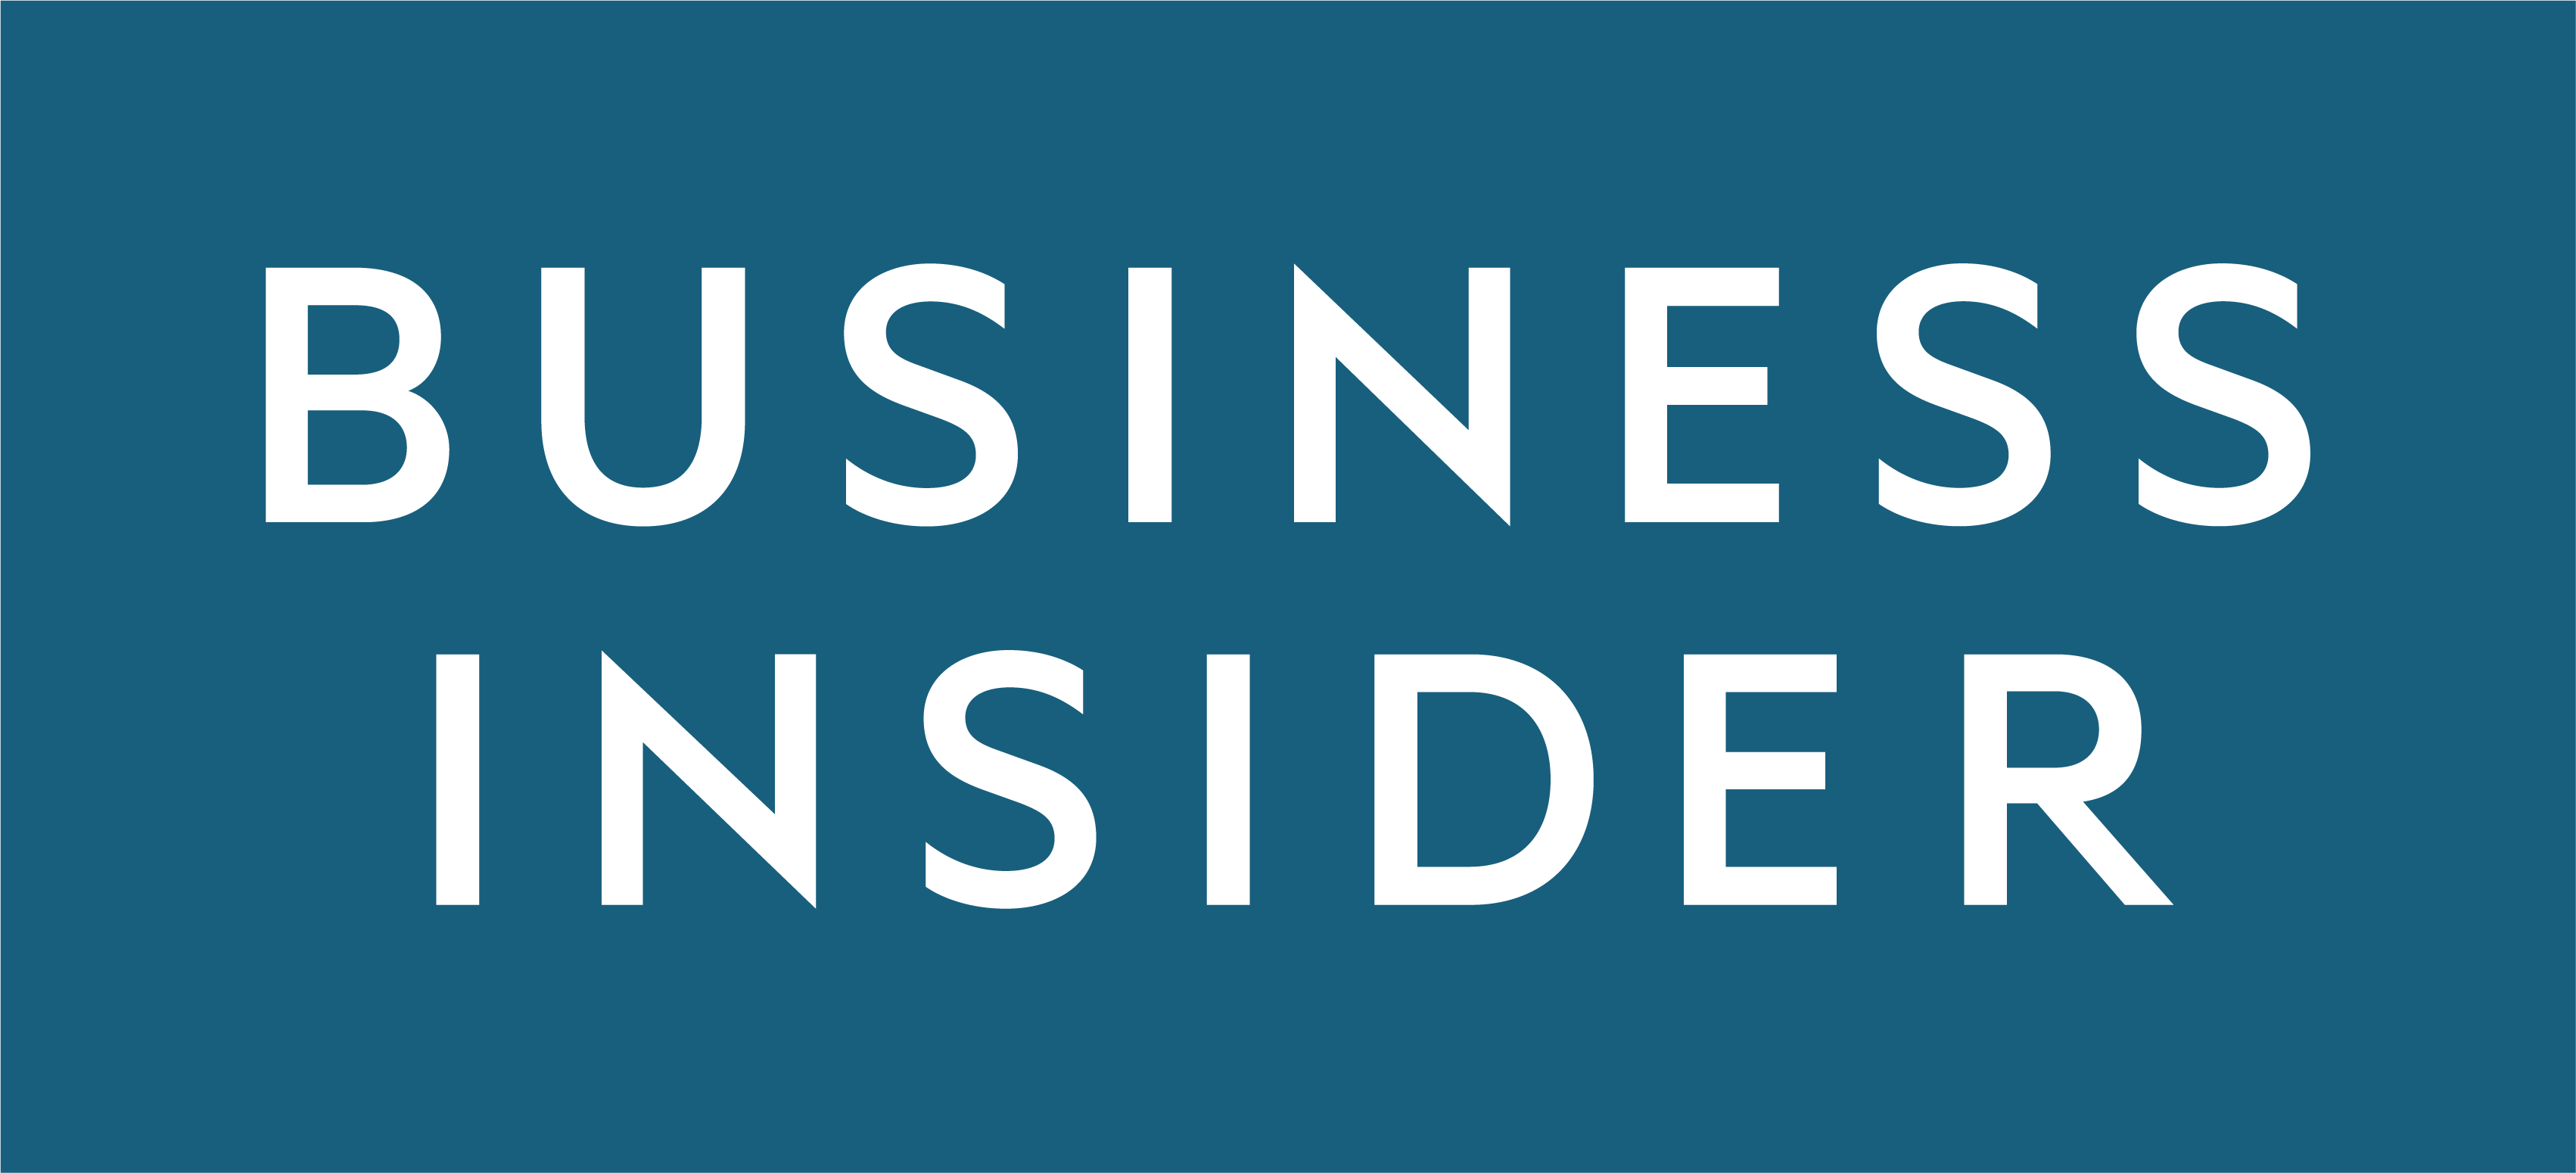 //flmedpsych.com/wp-content/uploads/2020/03/Business-Insider-logo.png